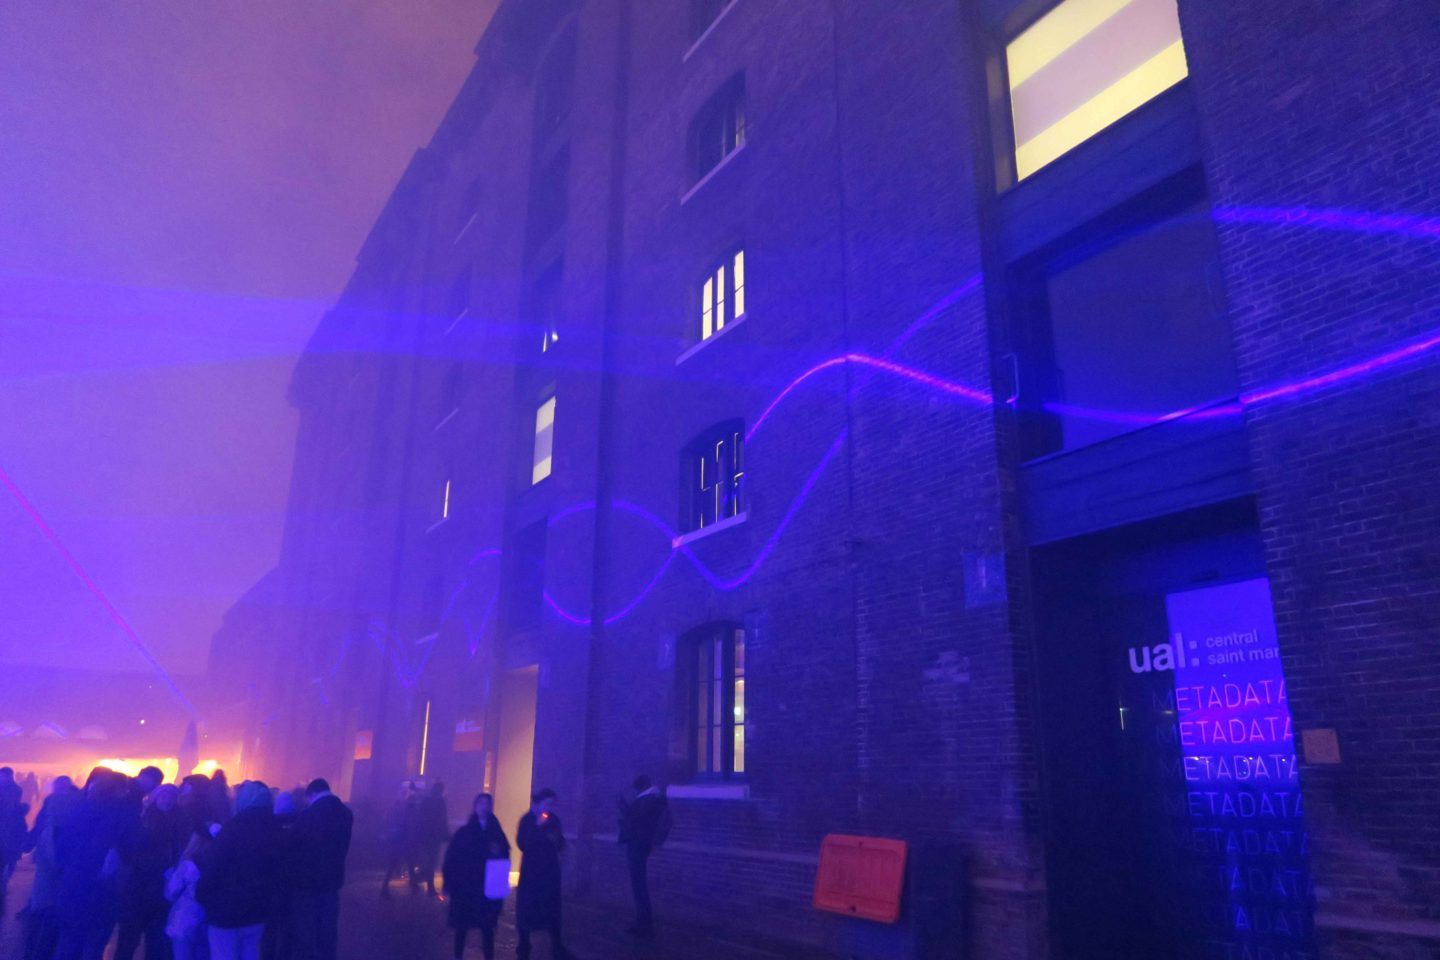 lumiere london laser lights